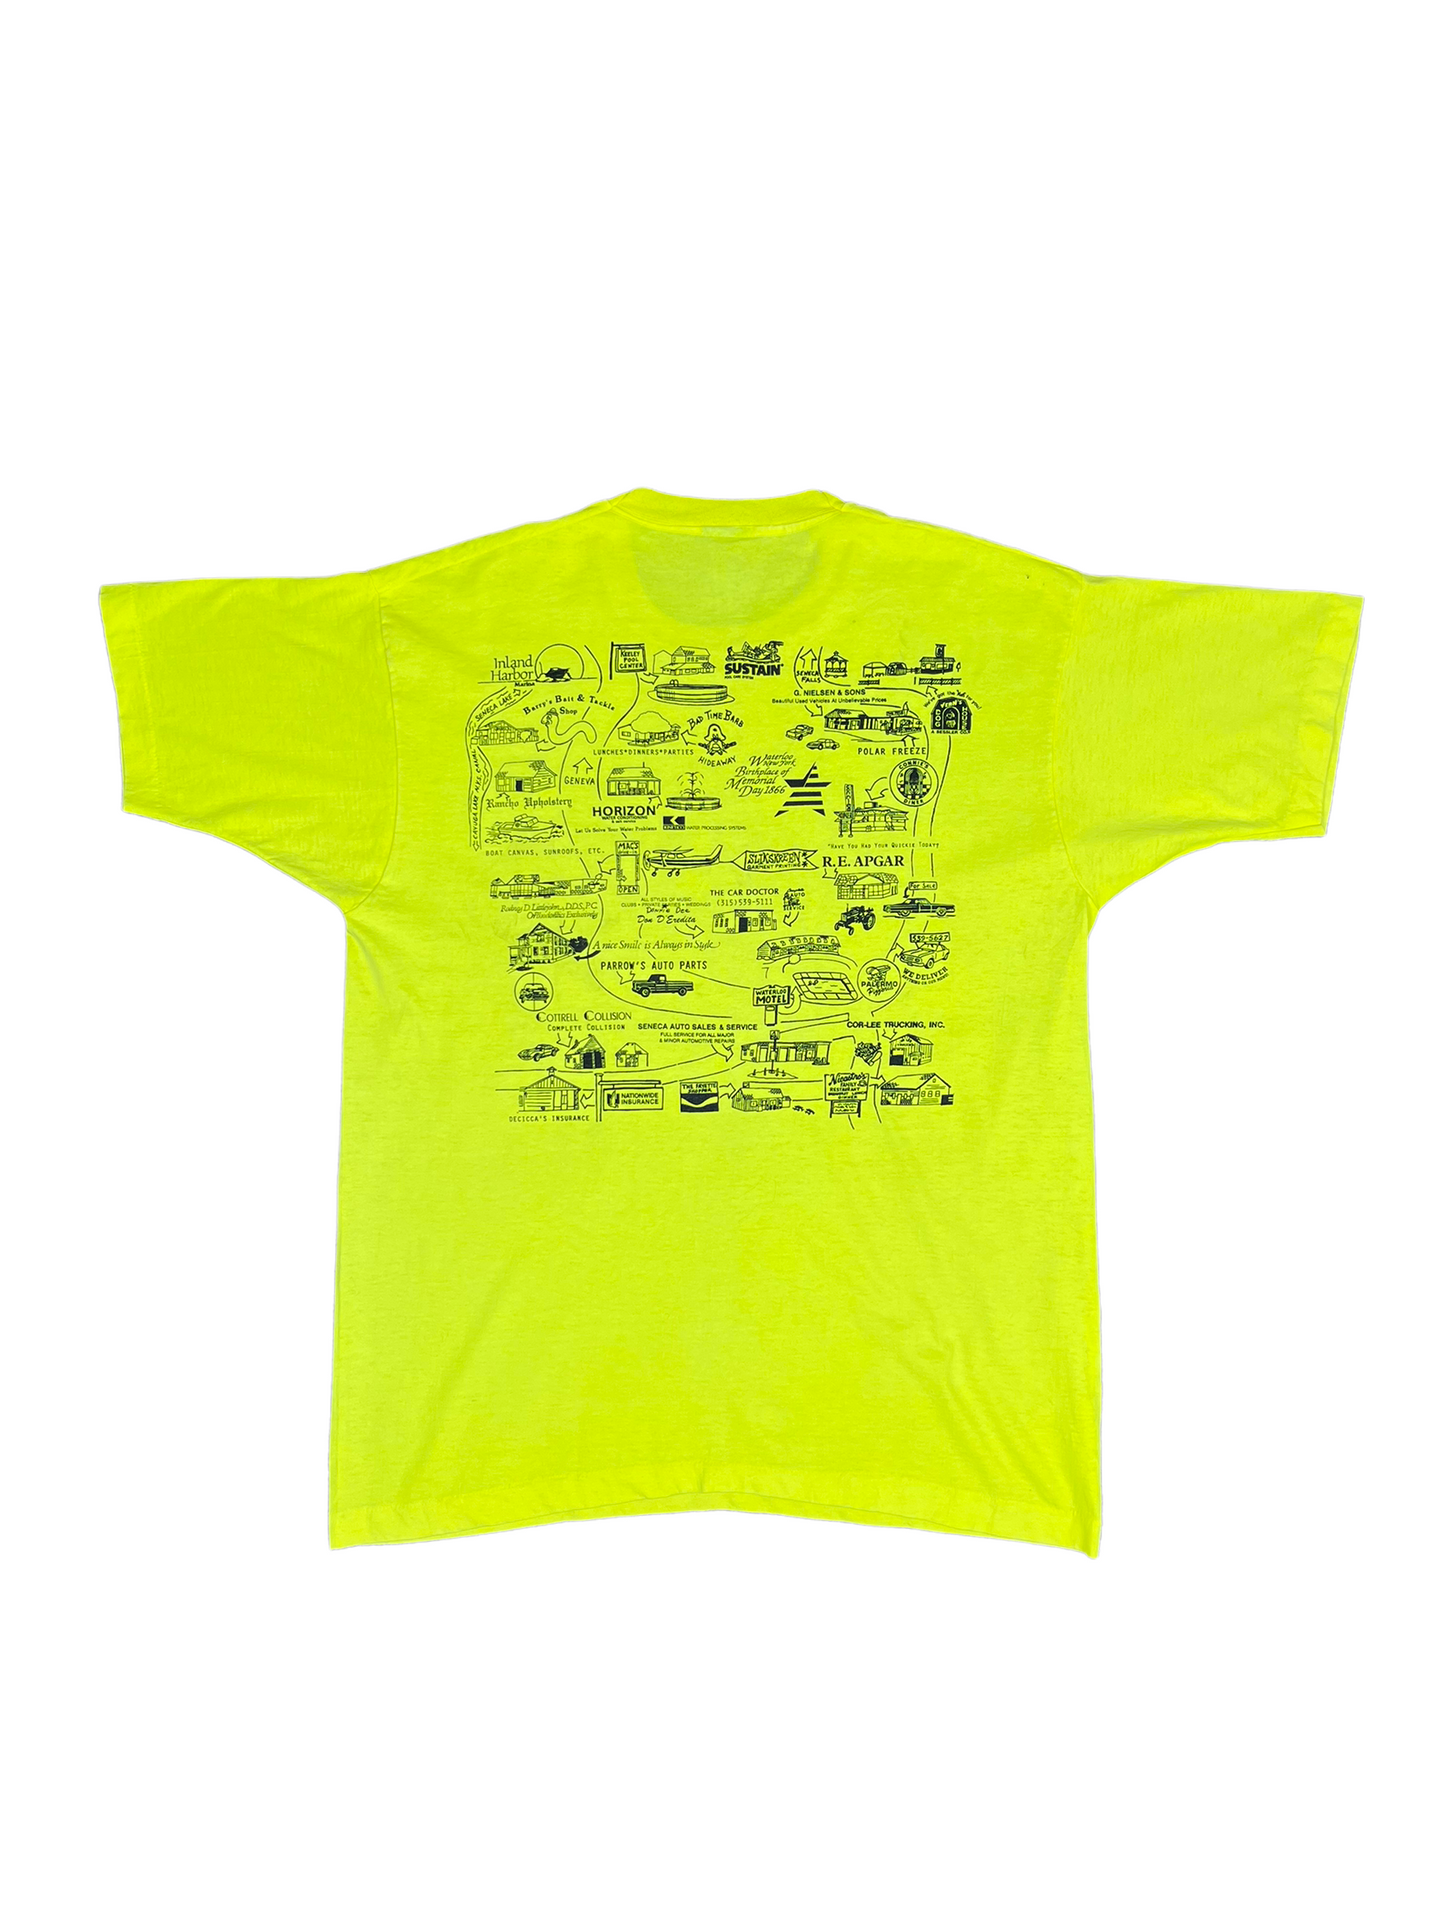 Vintage 90’s Waterloo New York T Shirt - XL